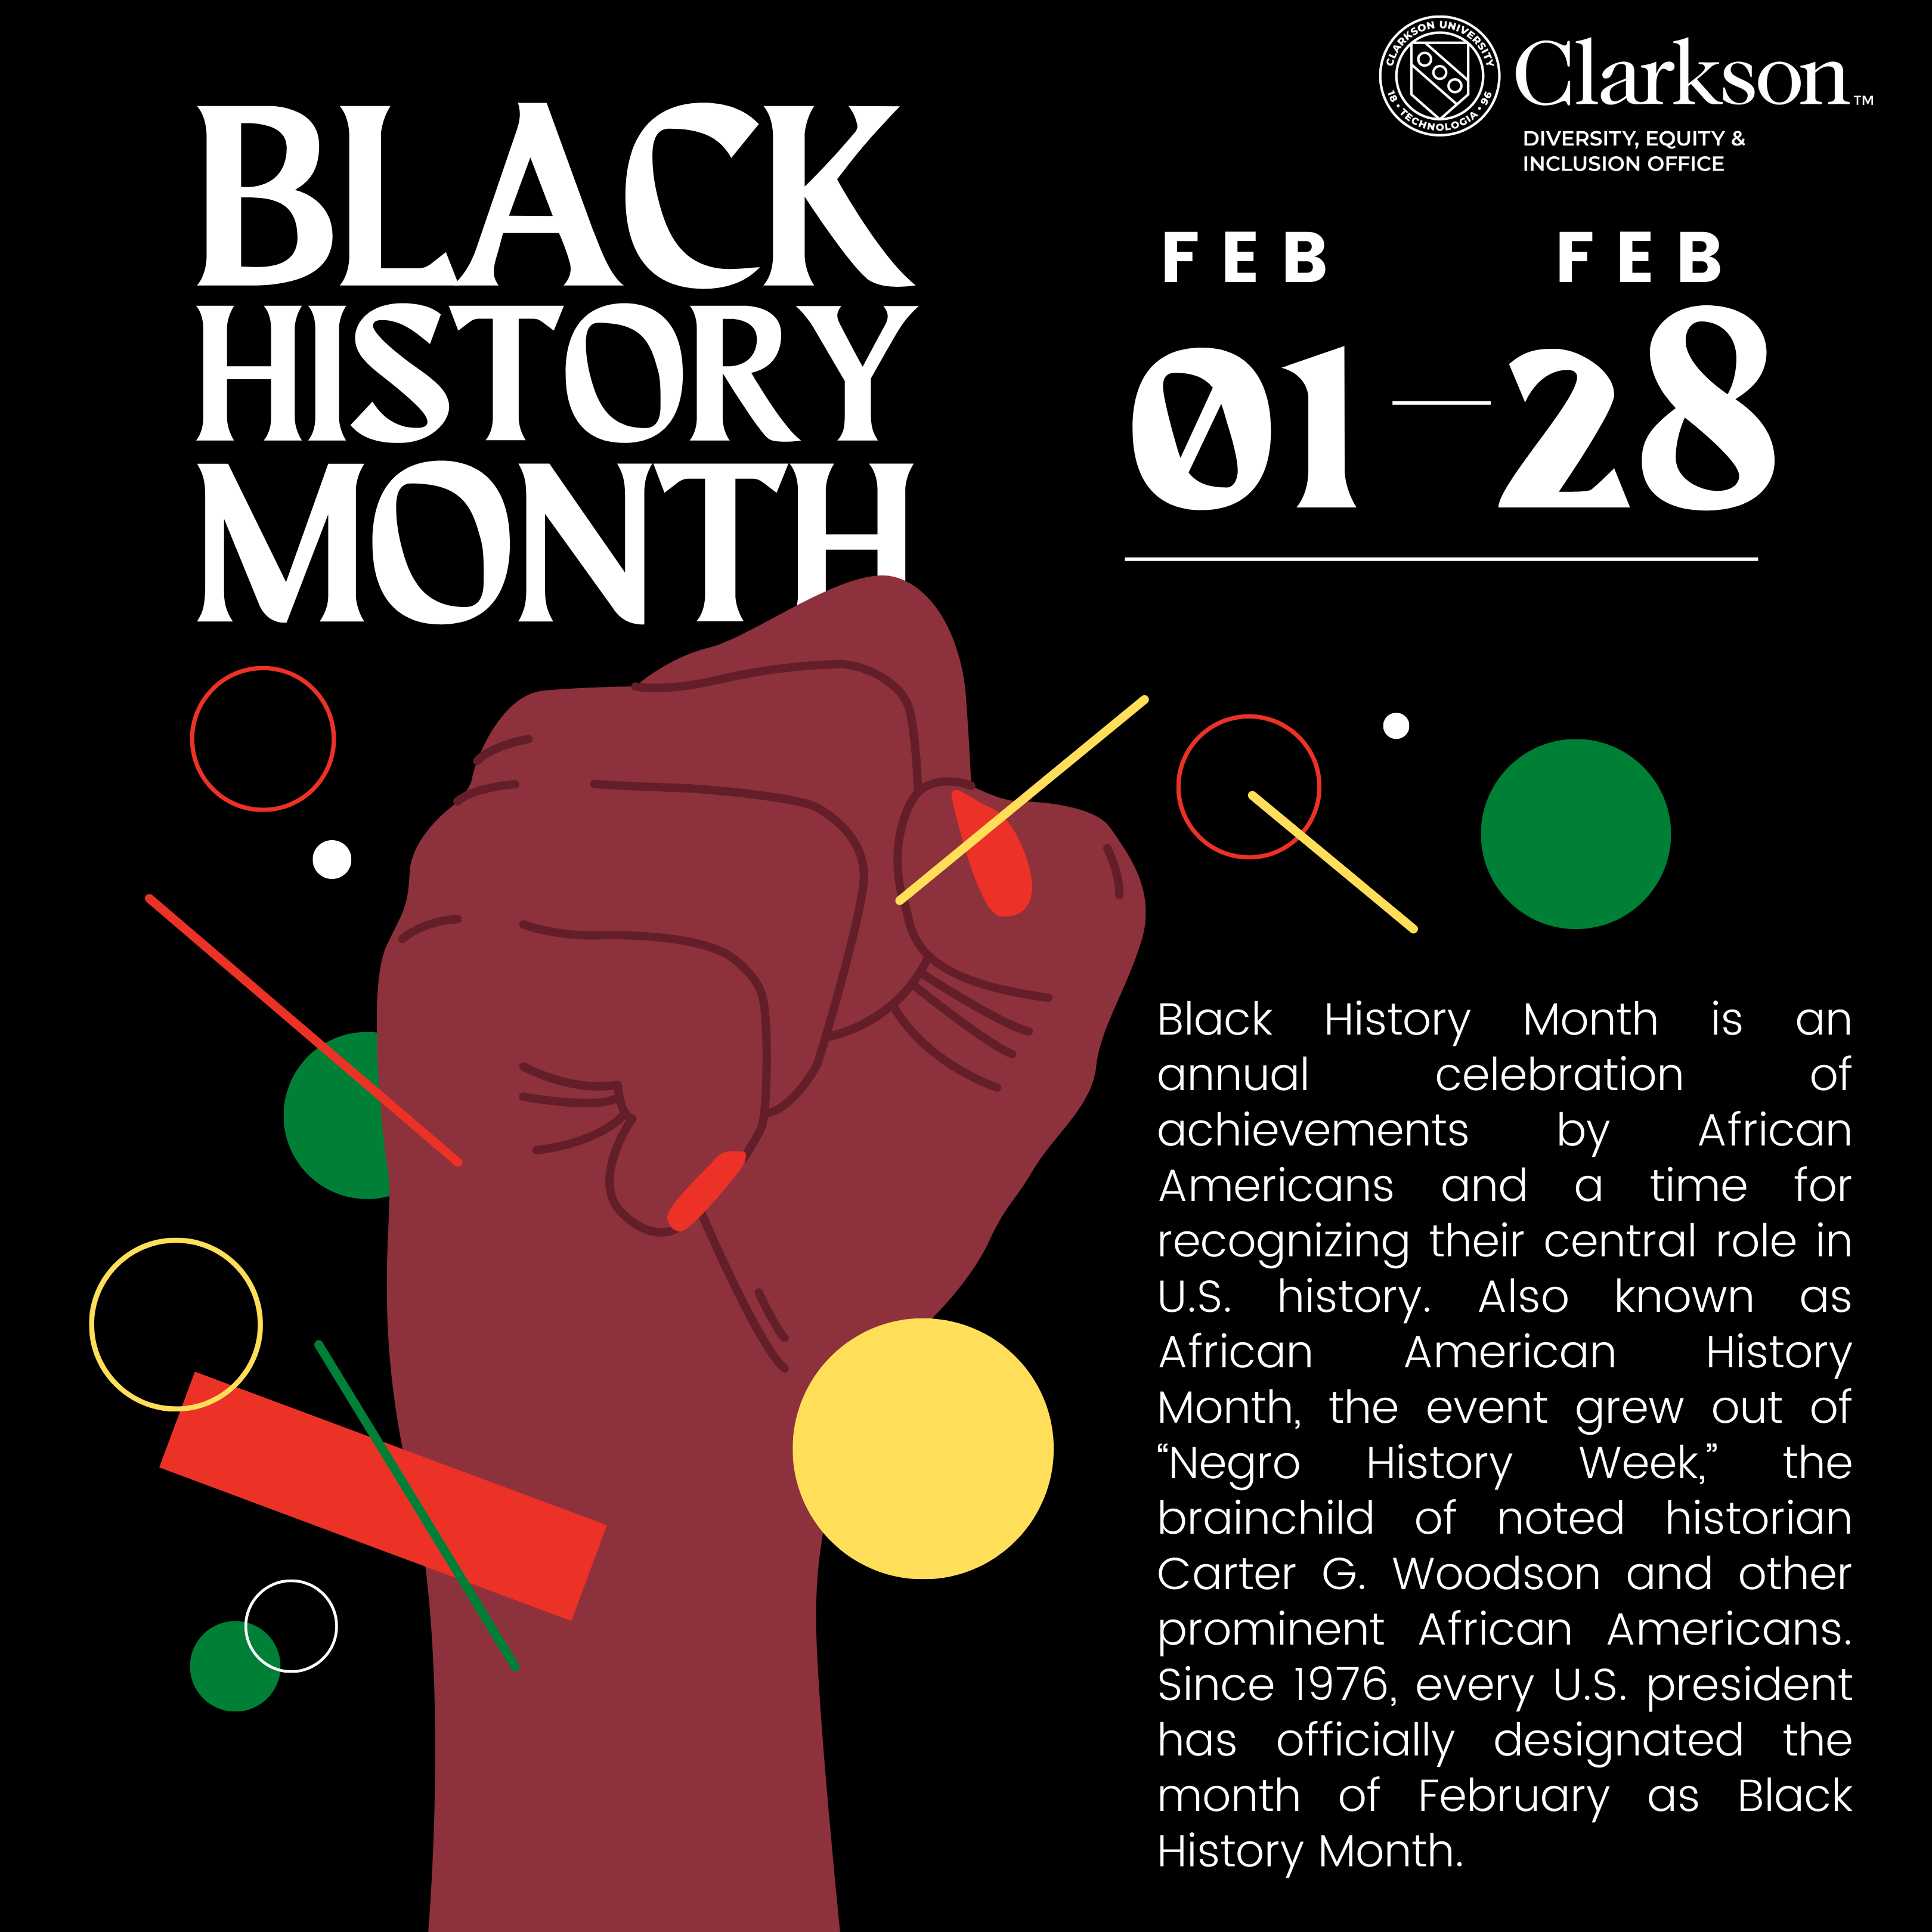 Happy Black History Month!